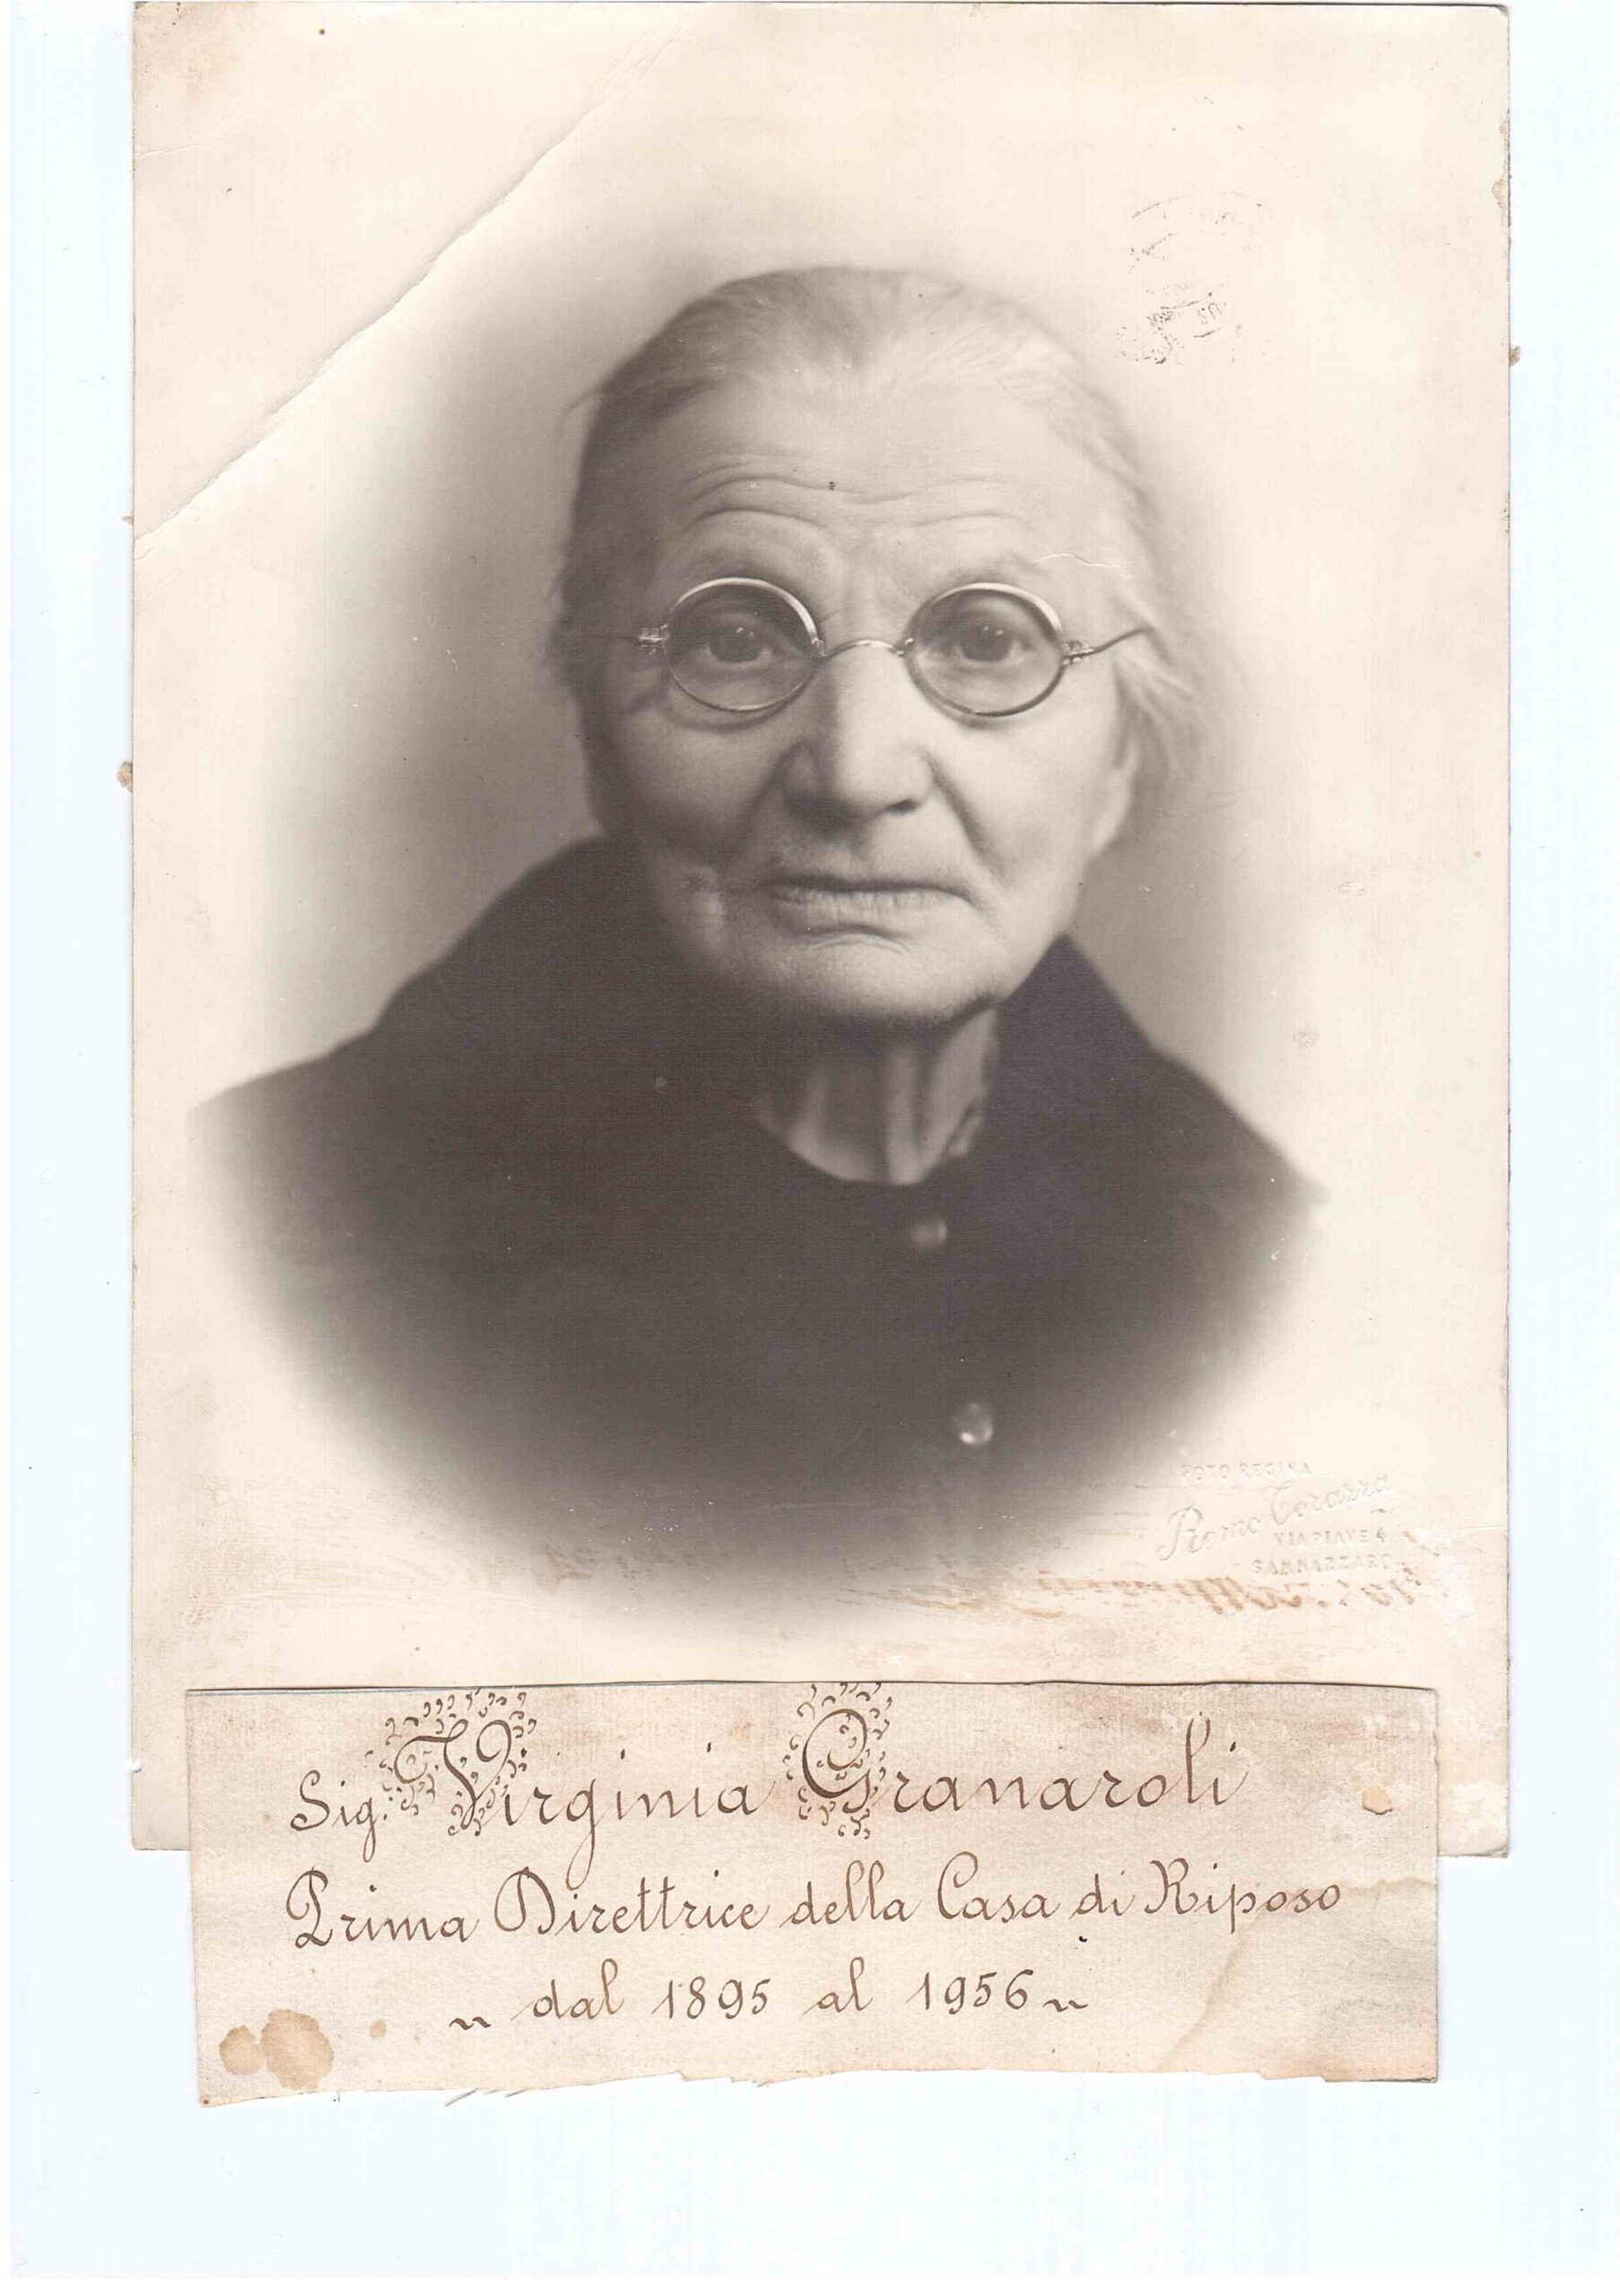 Virginia Granaroli